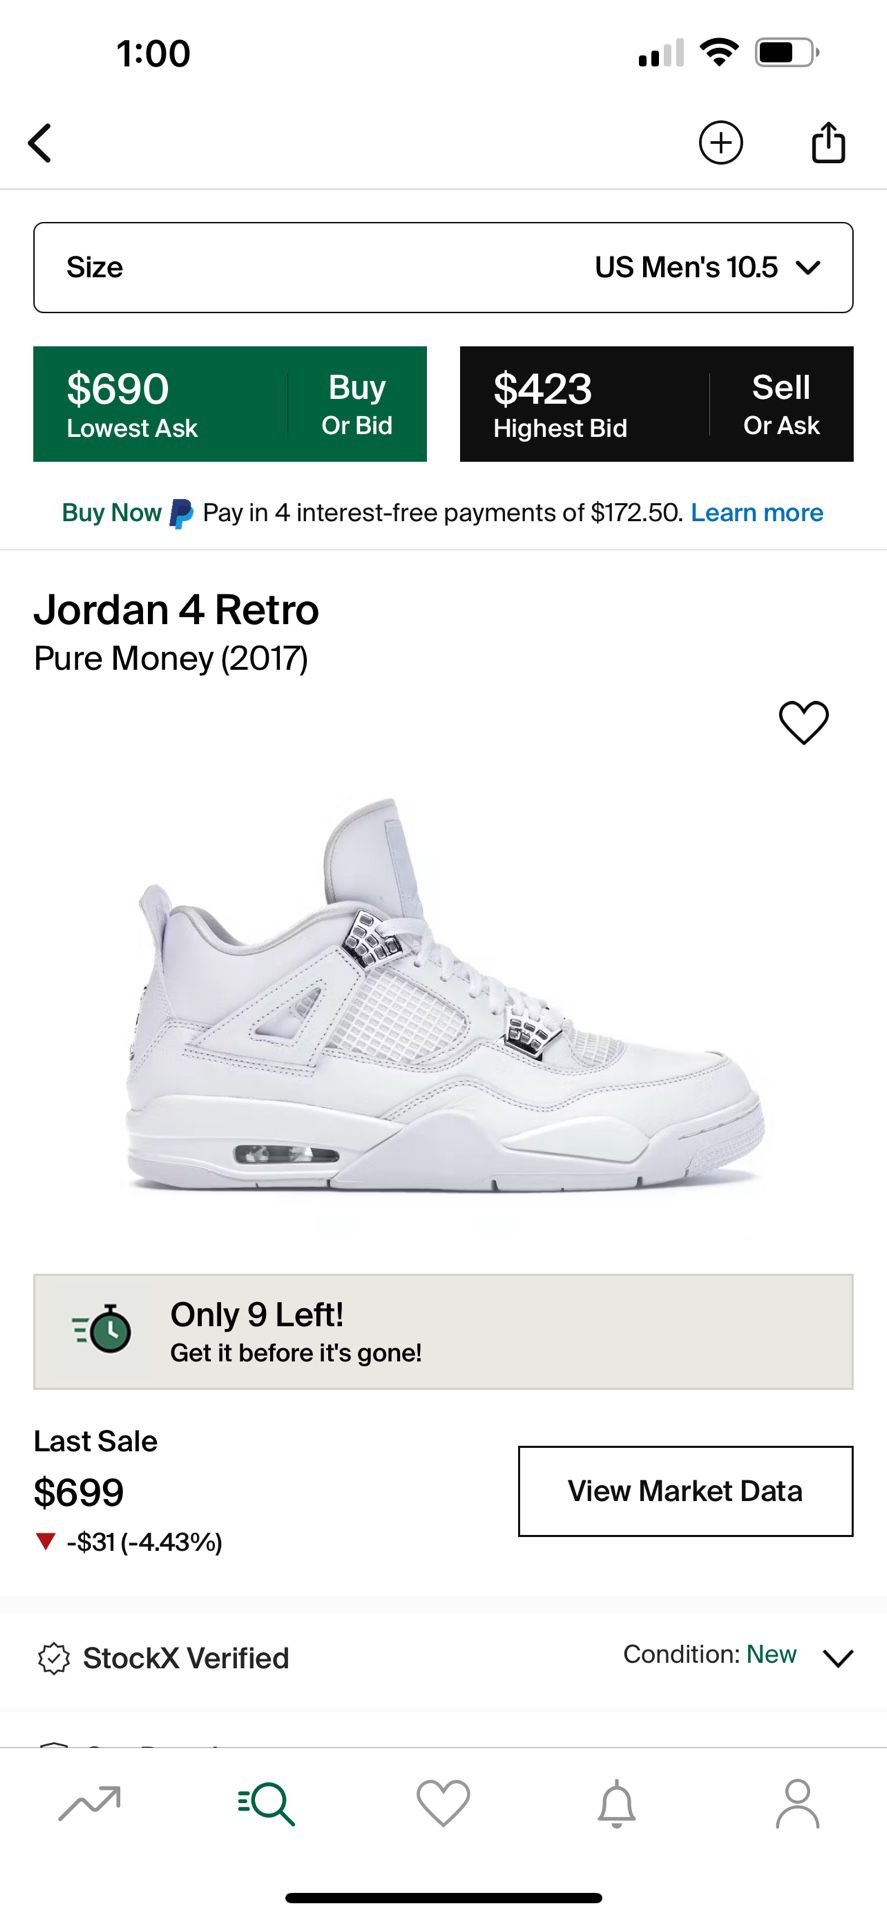 Jordan 4 Retro “Pure Money (2017)”